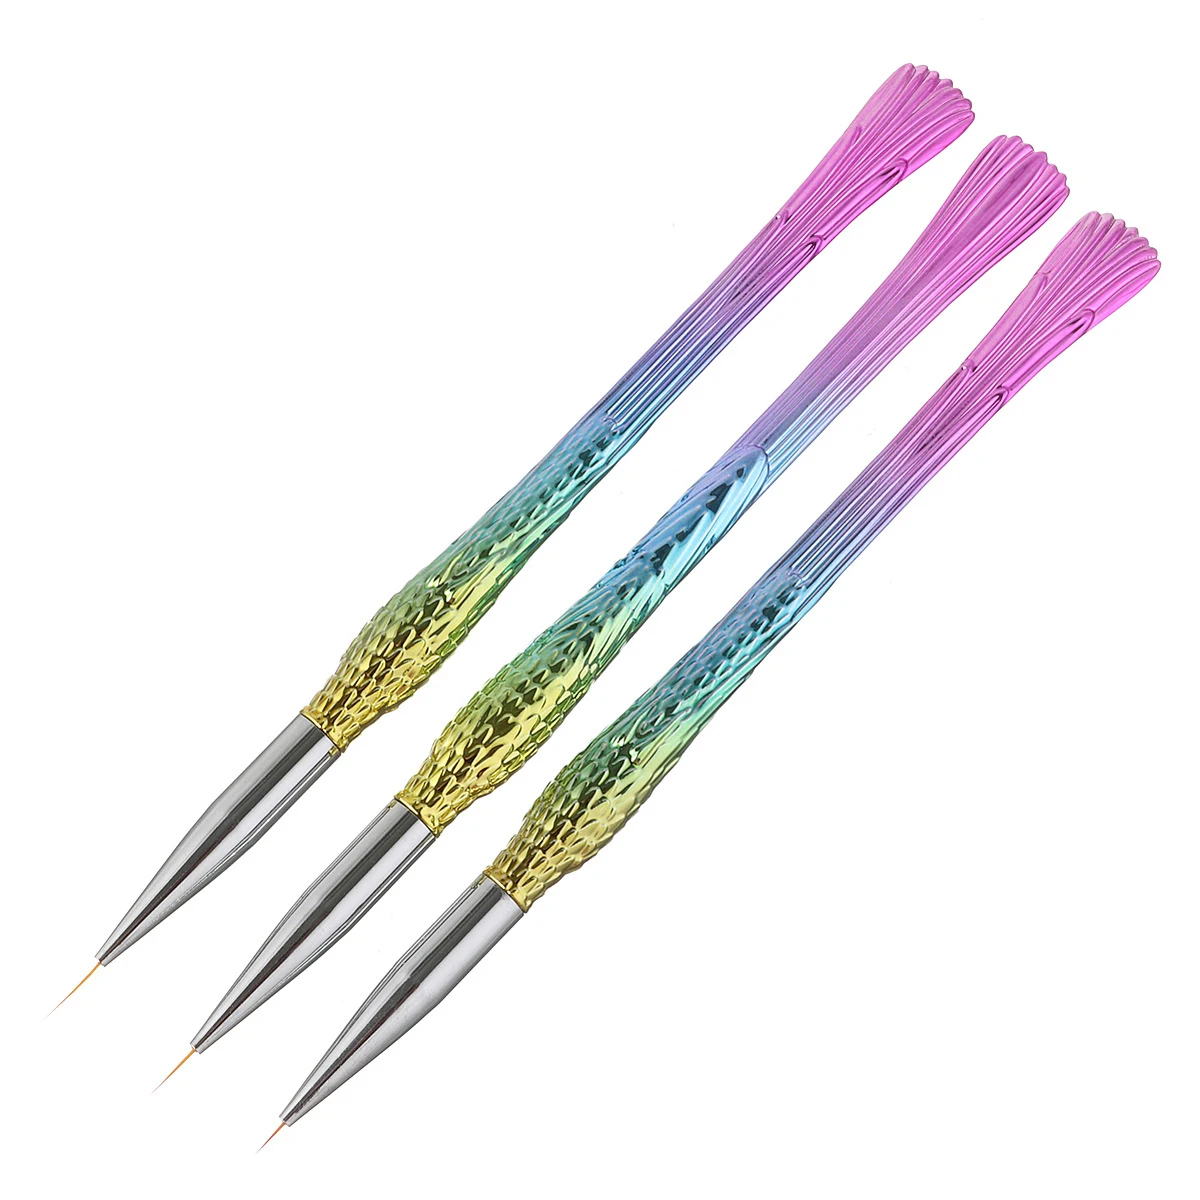 

Top Quality Professional Nail Art UV Gel Polish Paint Drawing brush nylon hair carving flower nail art brush pen with 3pcs/set